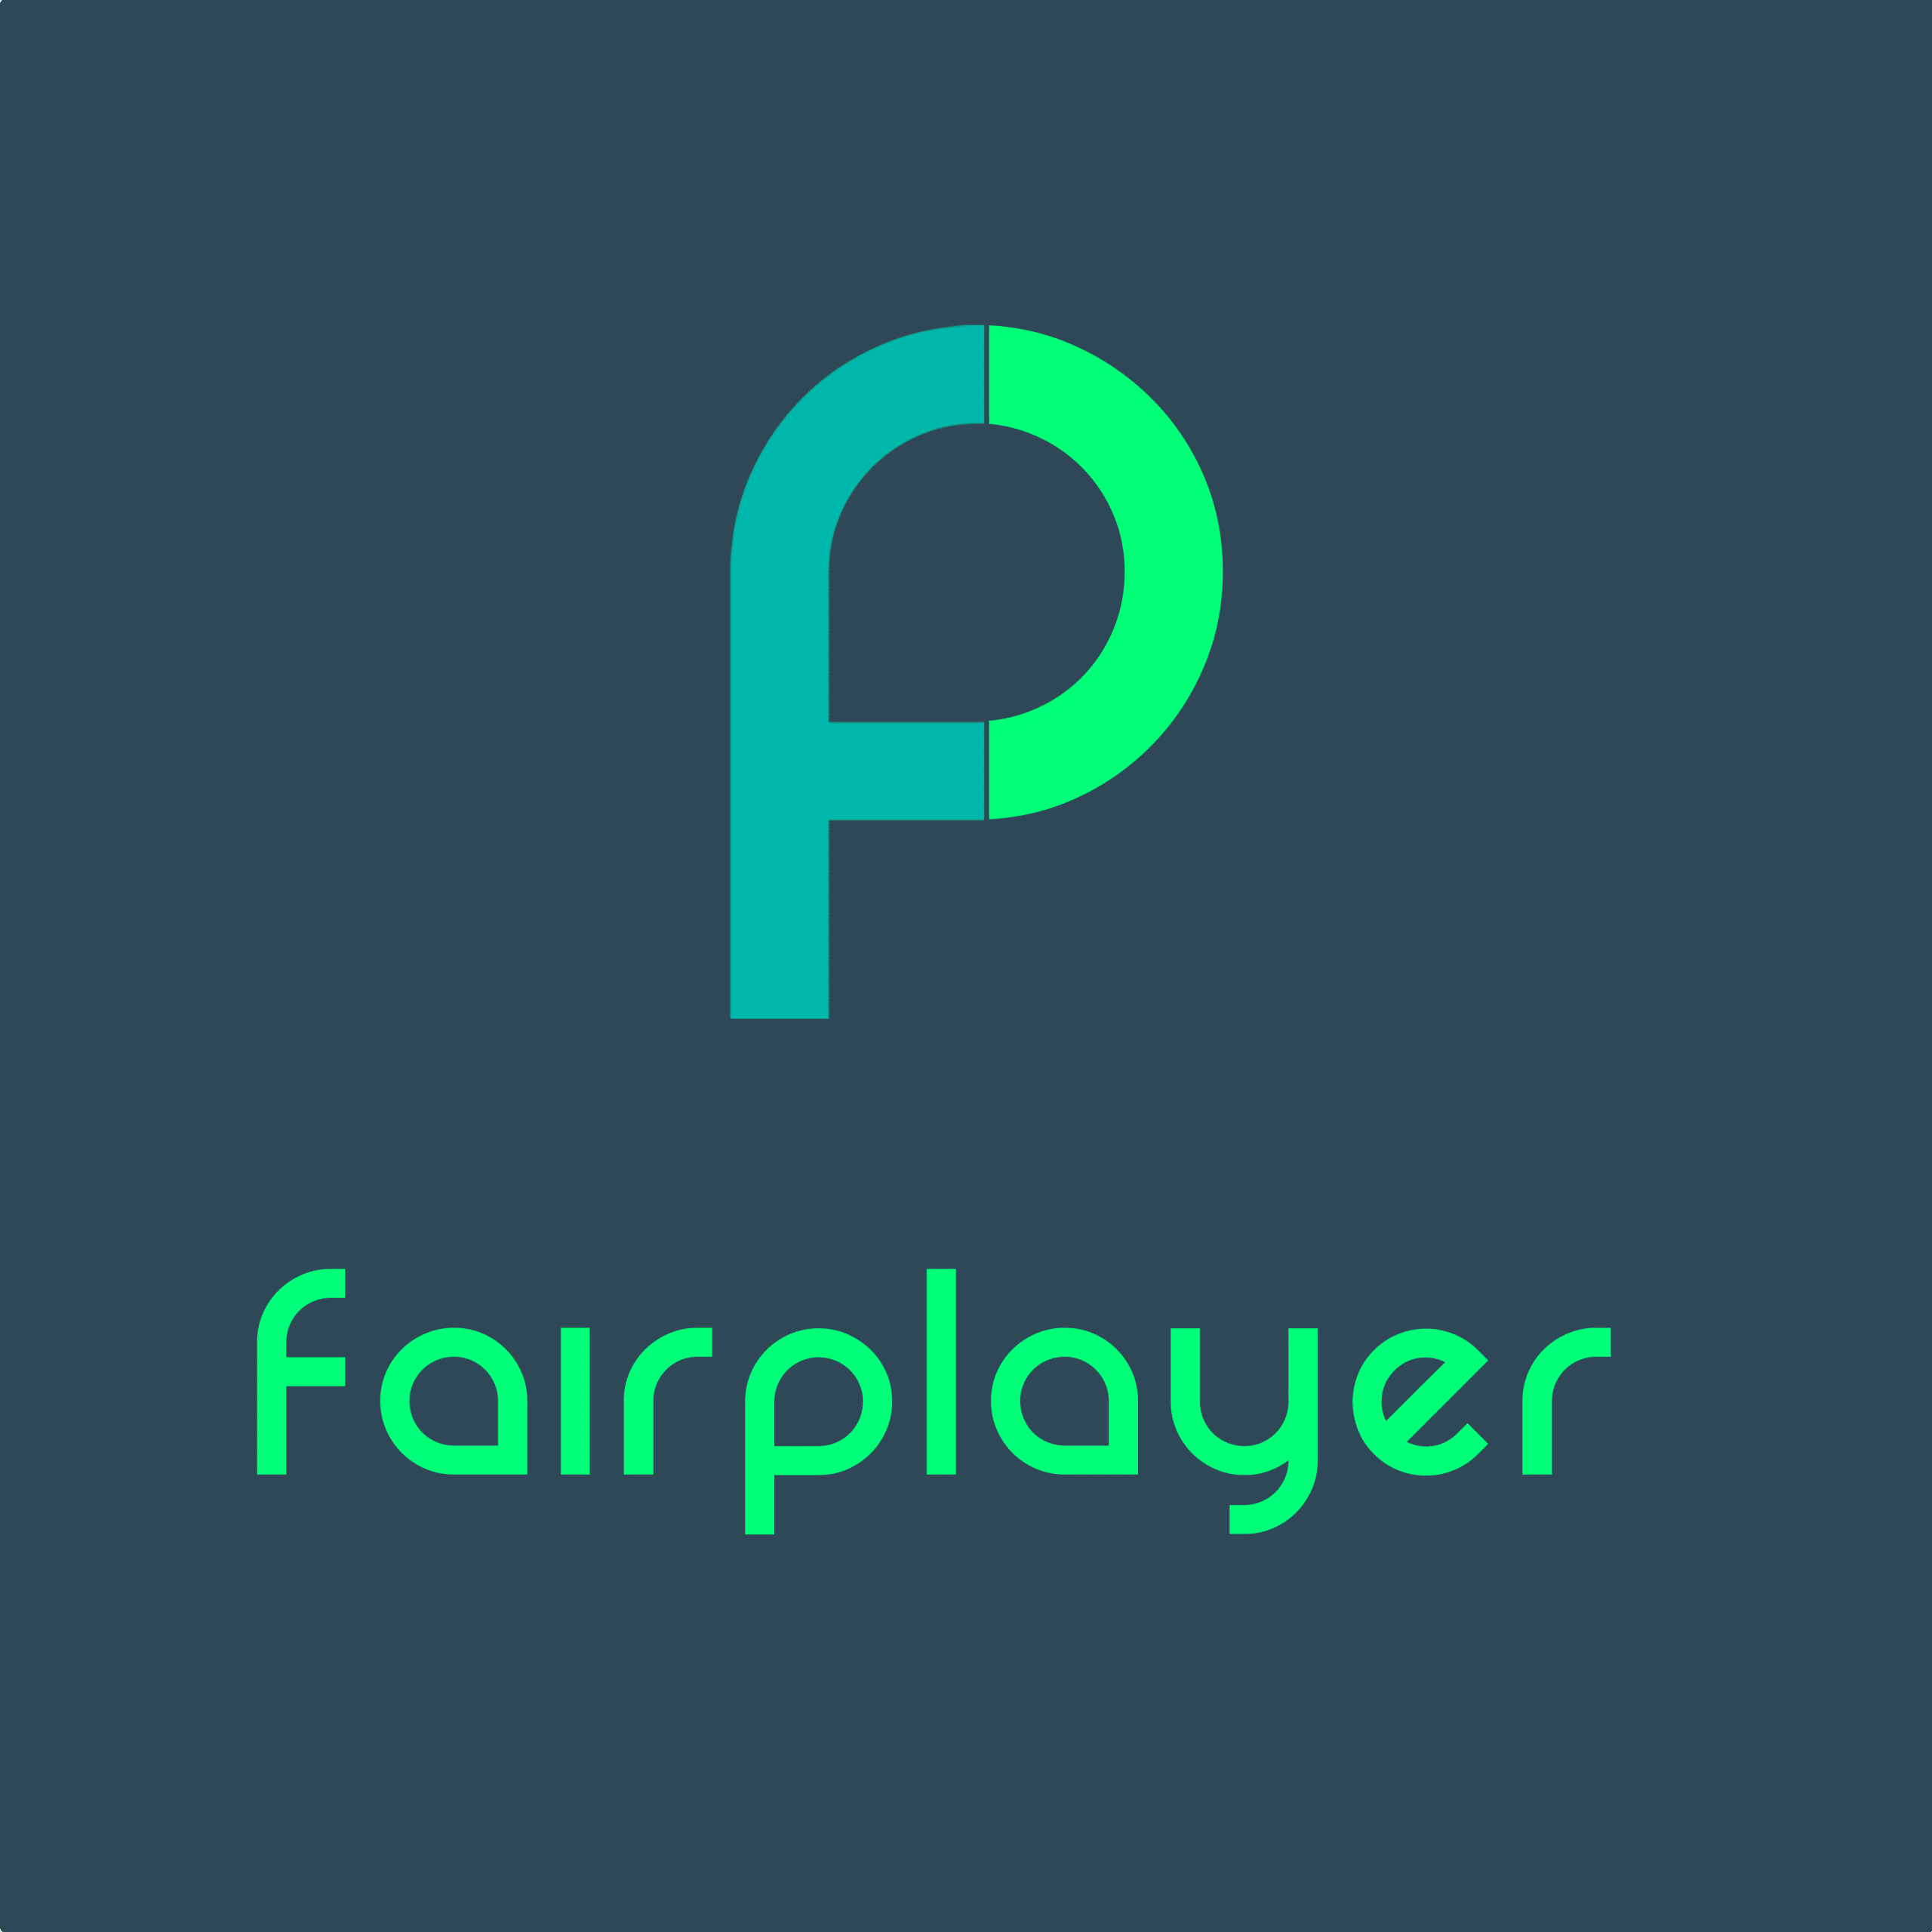 Fairplayer